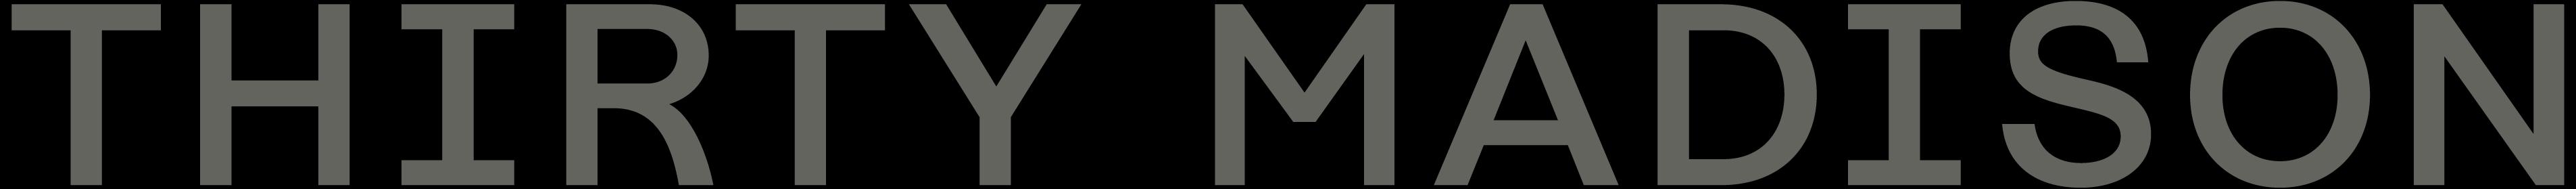 Thirty Madison_logo